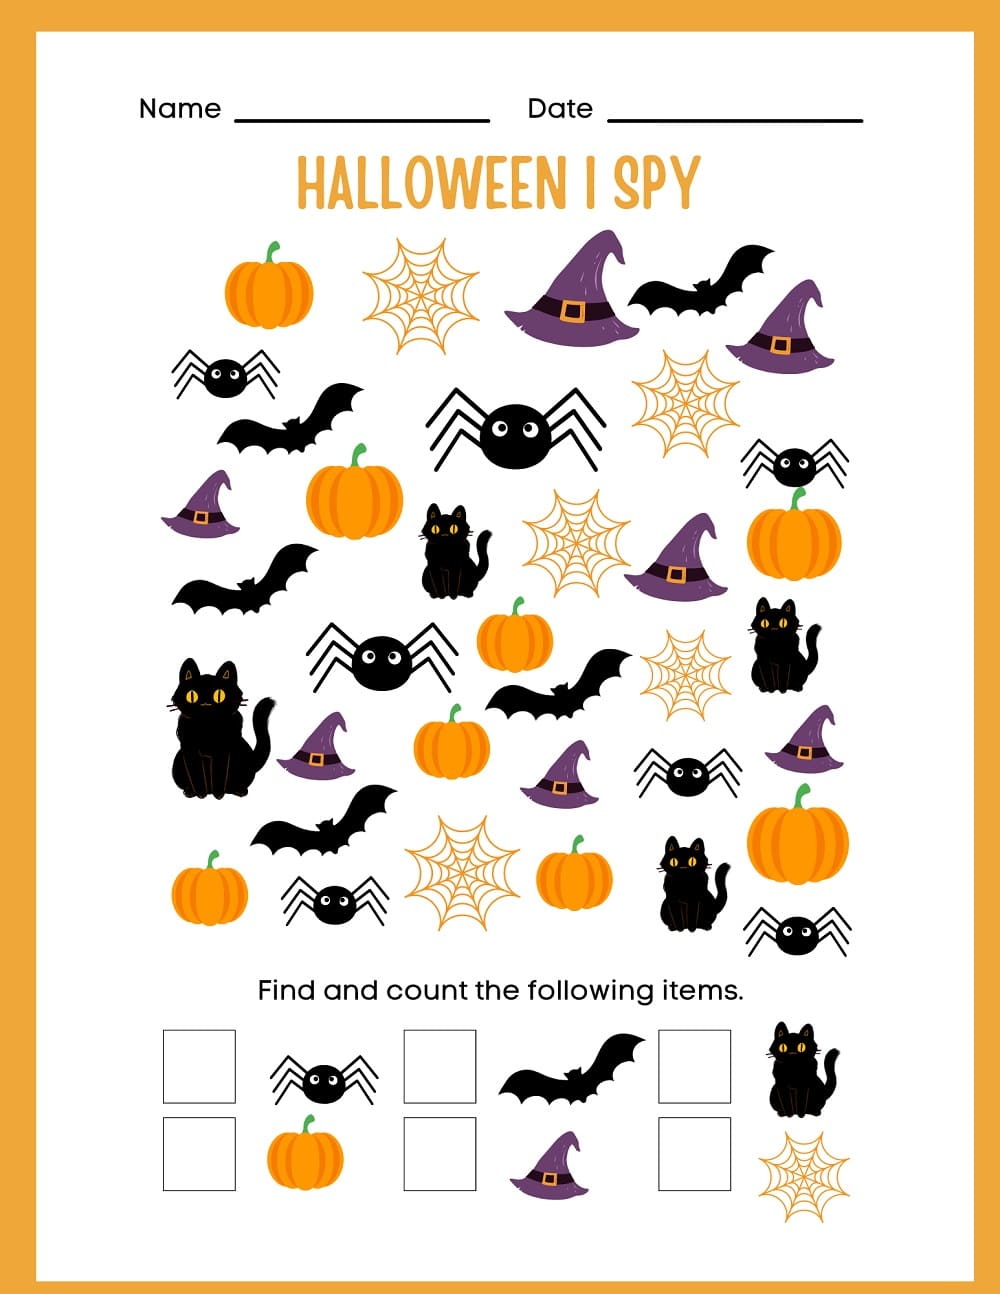 Printable Halloween I Spy Free Image